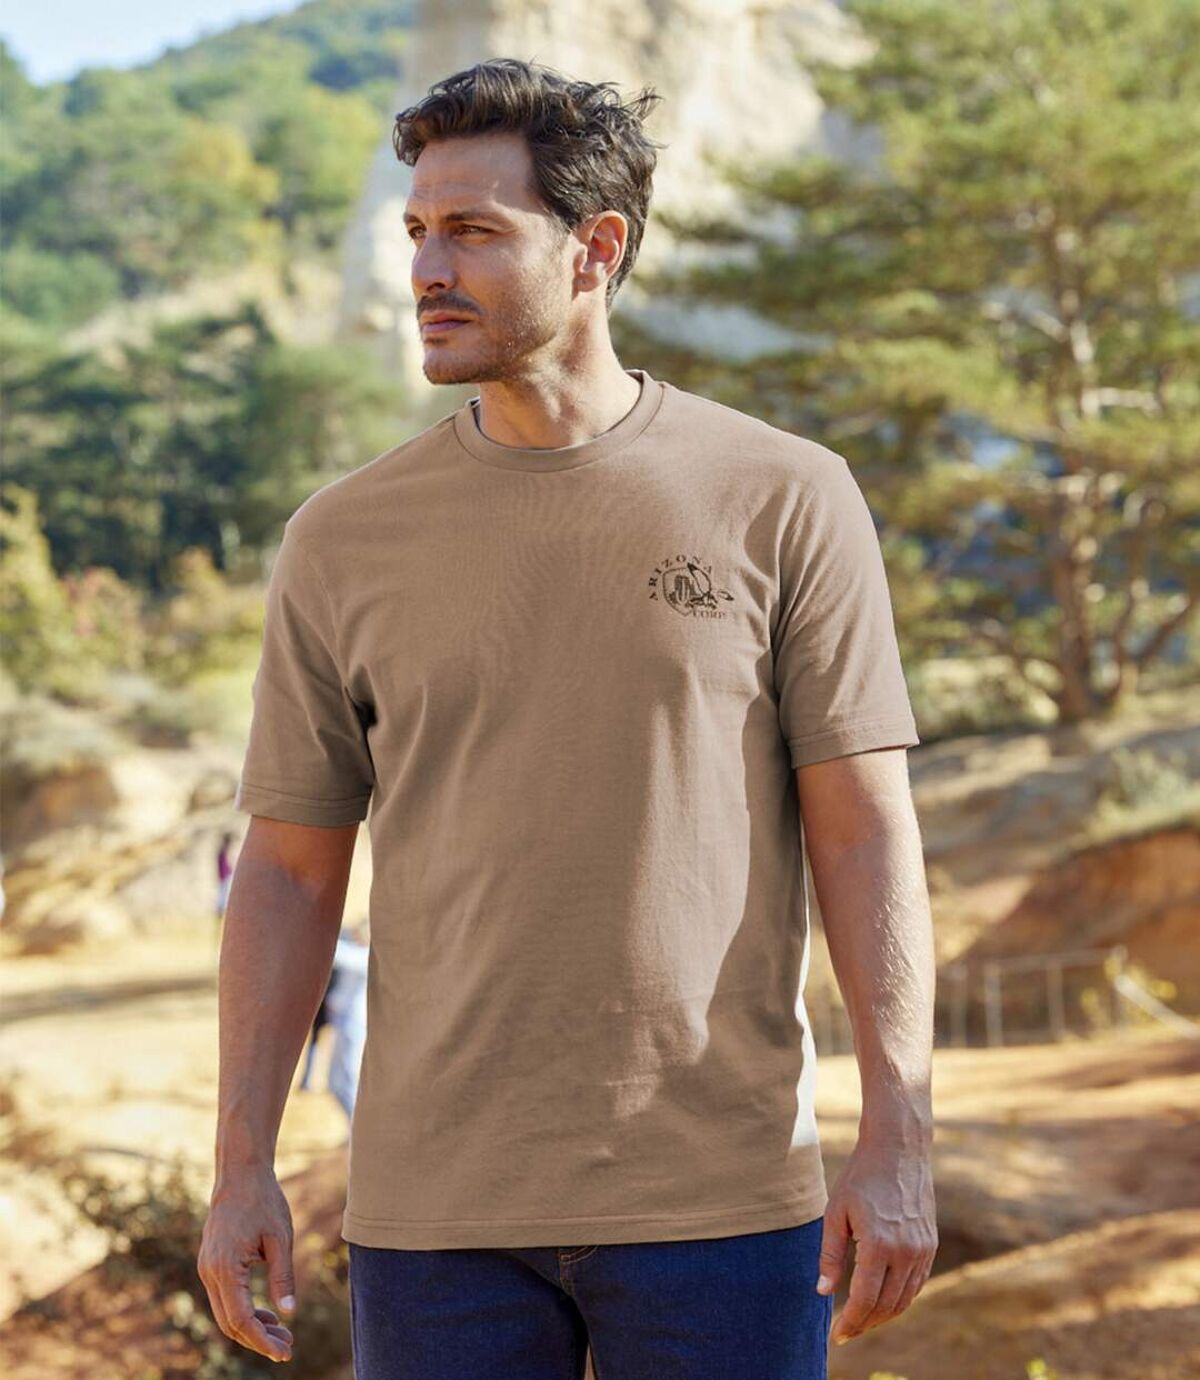 4 darabos, Essential Outdoor póló szett Atlas For Men